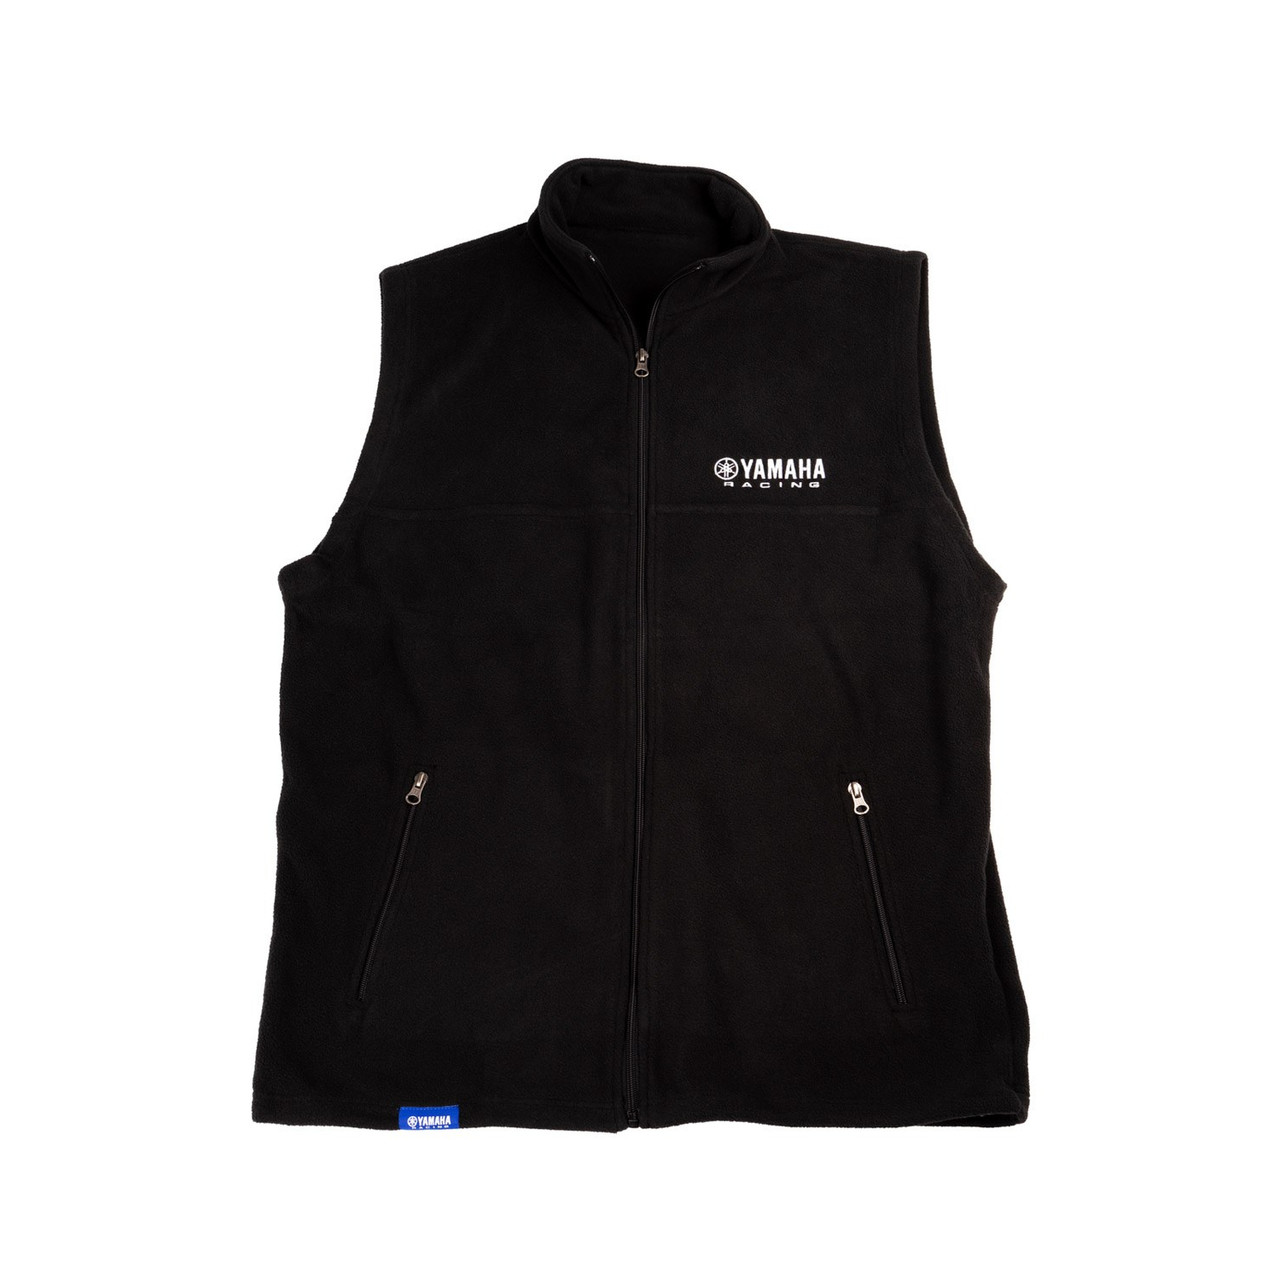 Yamaha New OEM Men's Branded Polyester Black Racing Zip Up Vest, CRP-20VYR-BK-2X